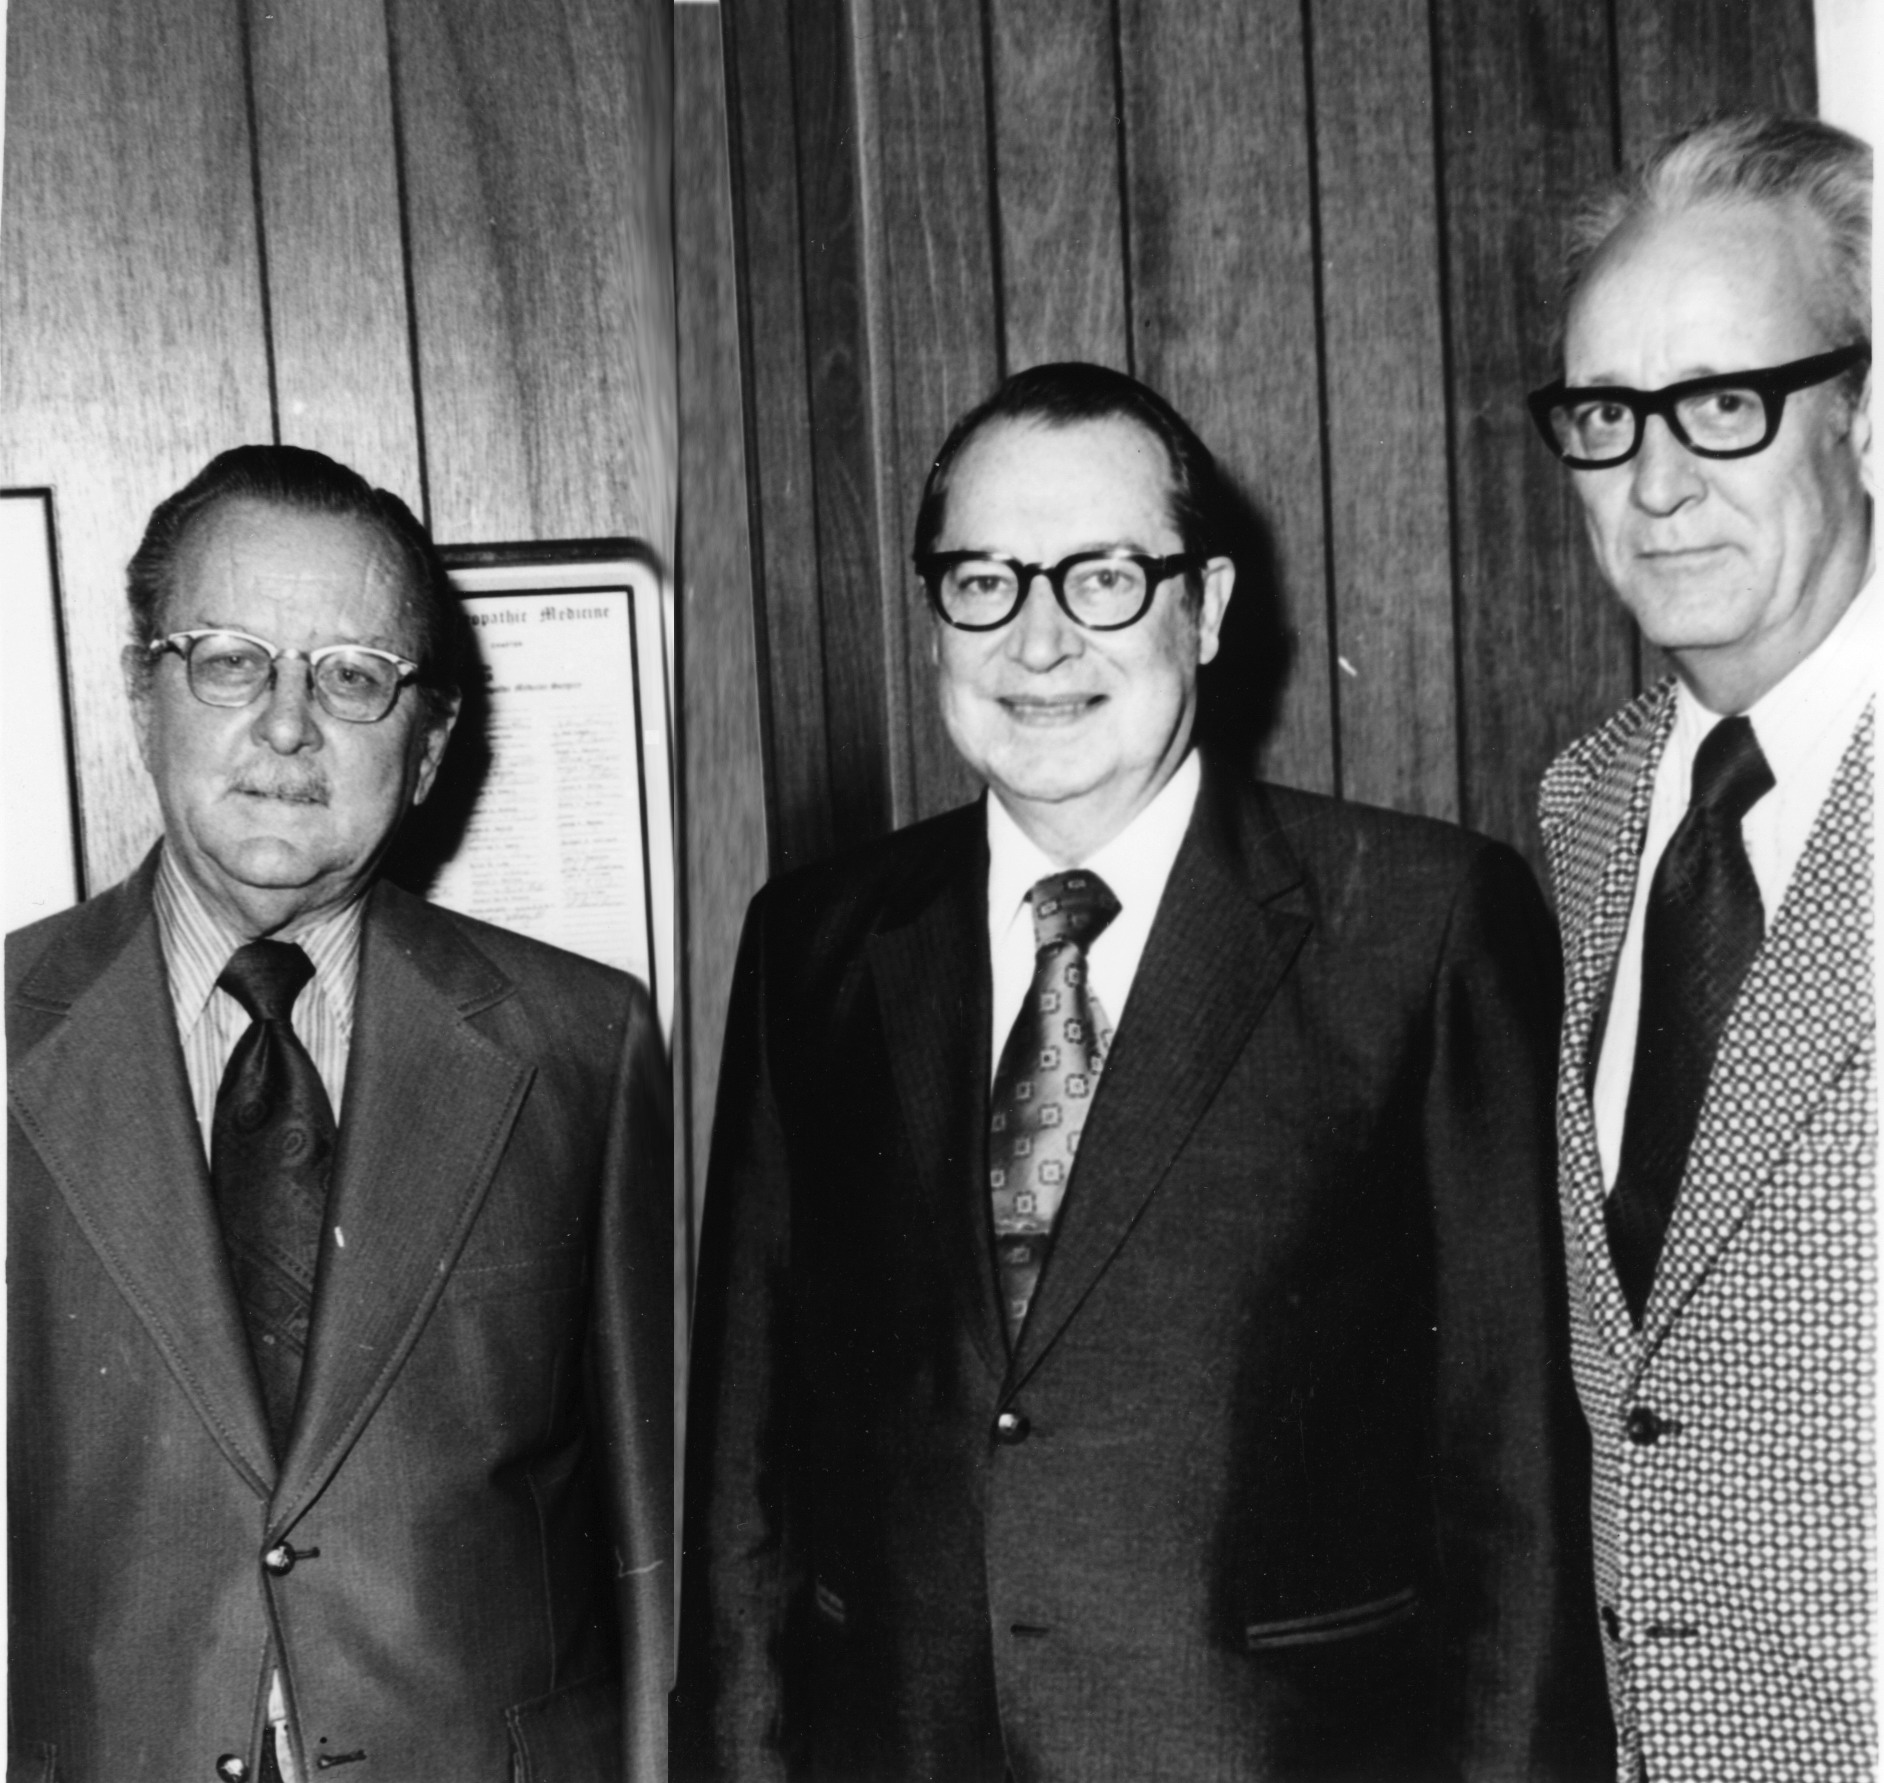 Dr. D.D. Beyer, Dr. George Luibel and Dr. Carl Everett